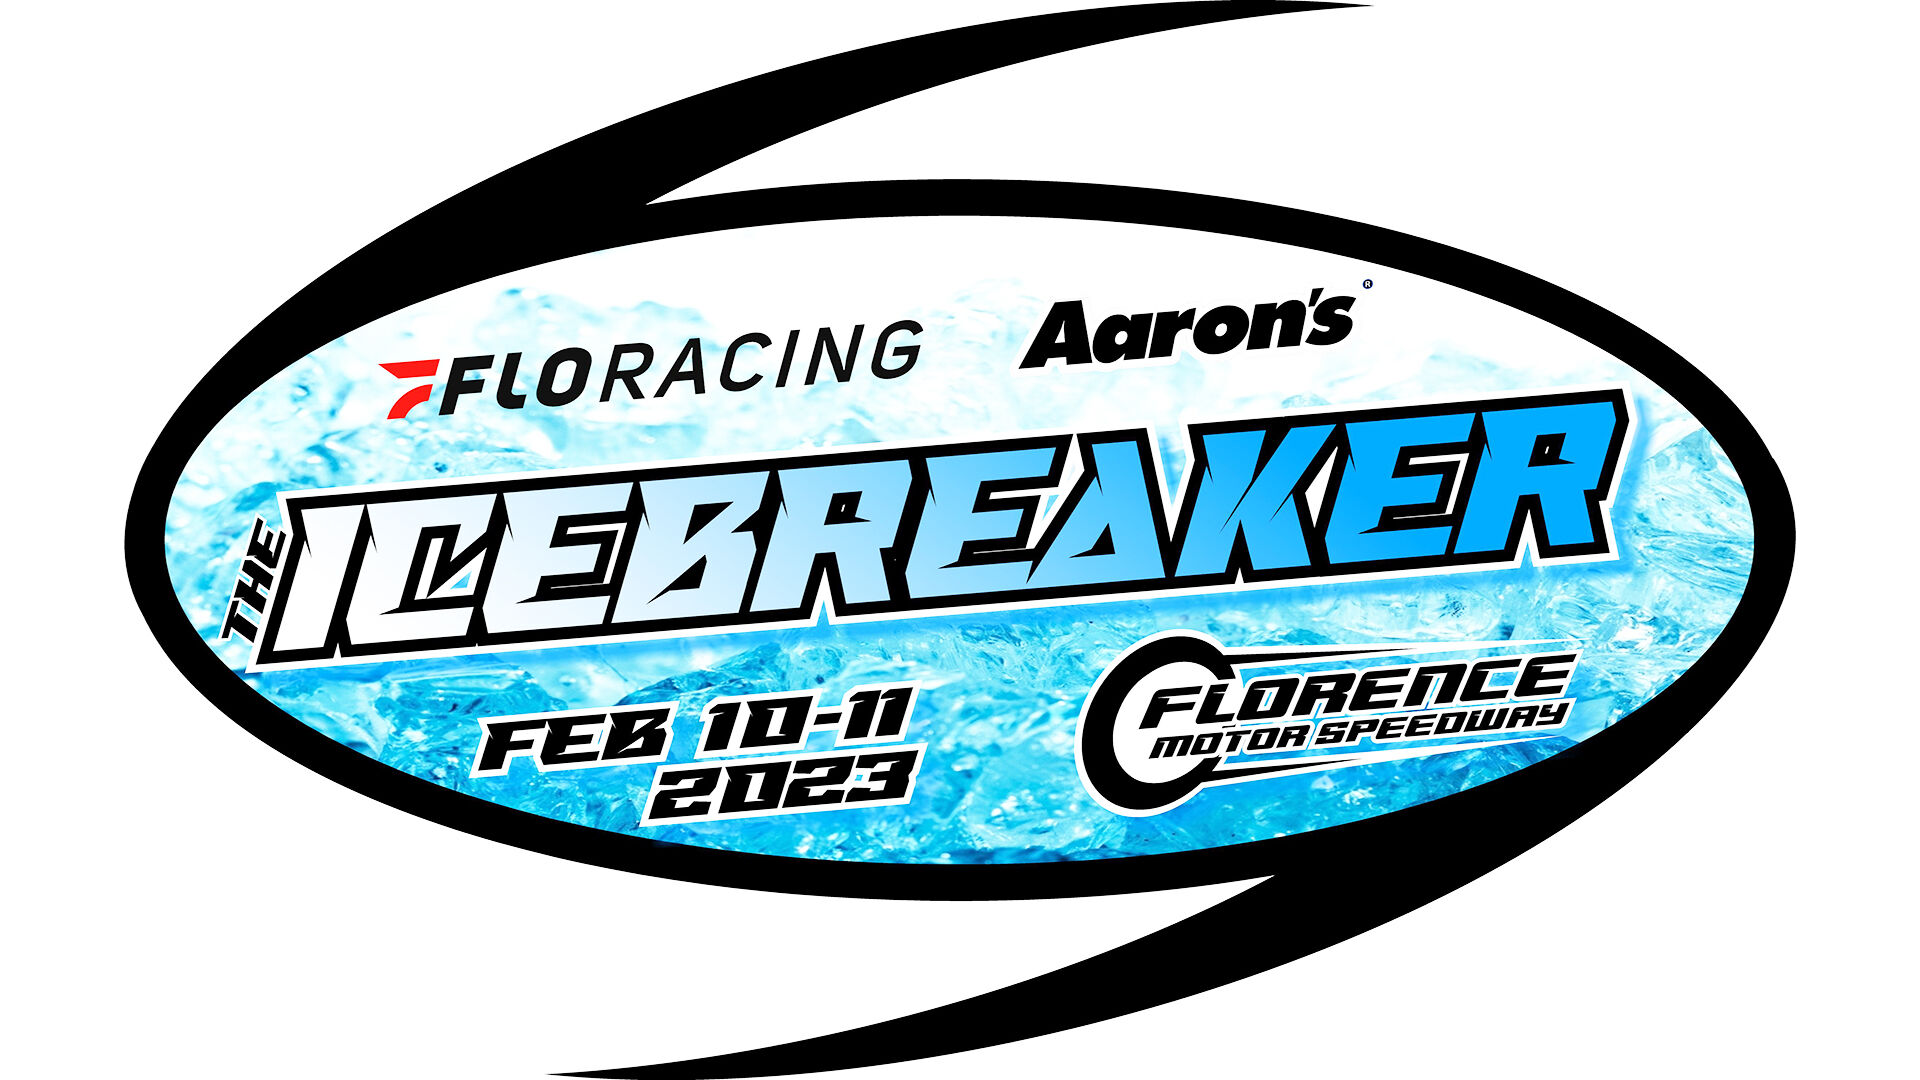 Schedule altered for FMS IceBreaker race featuring Earnhardt Jr.